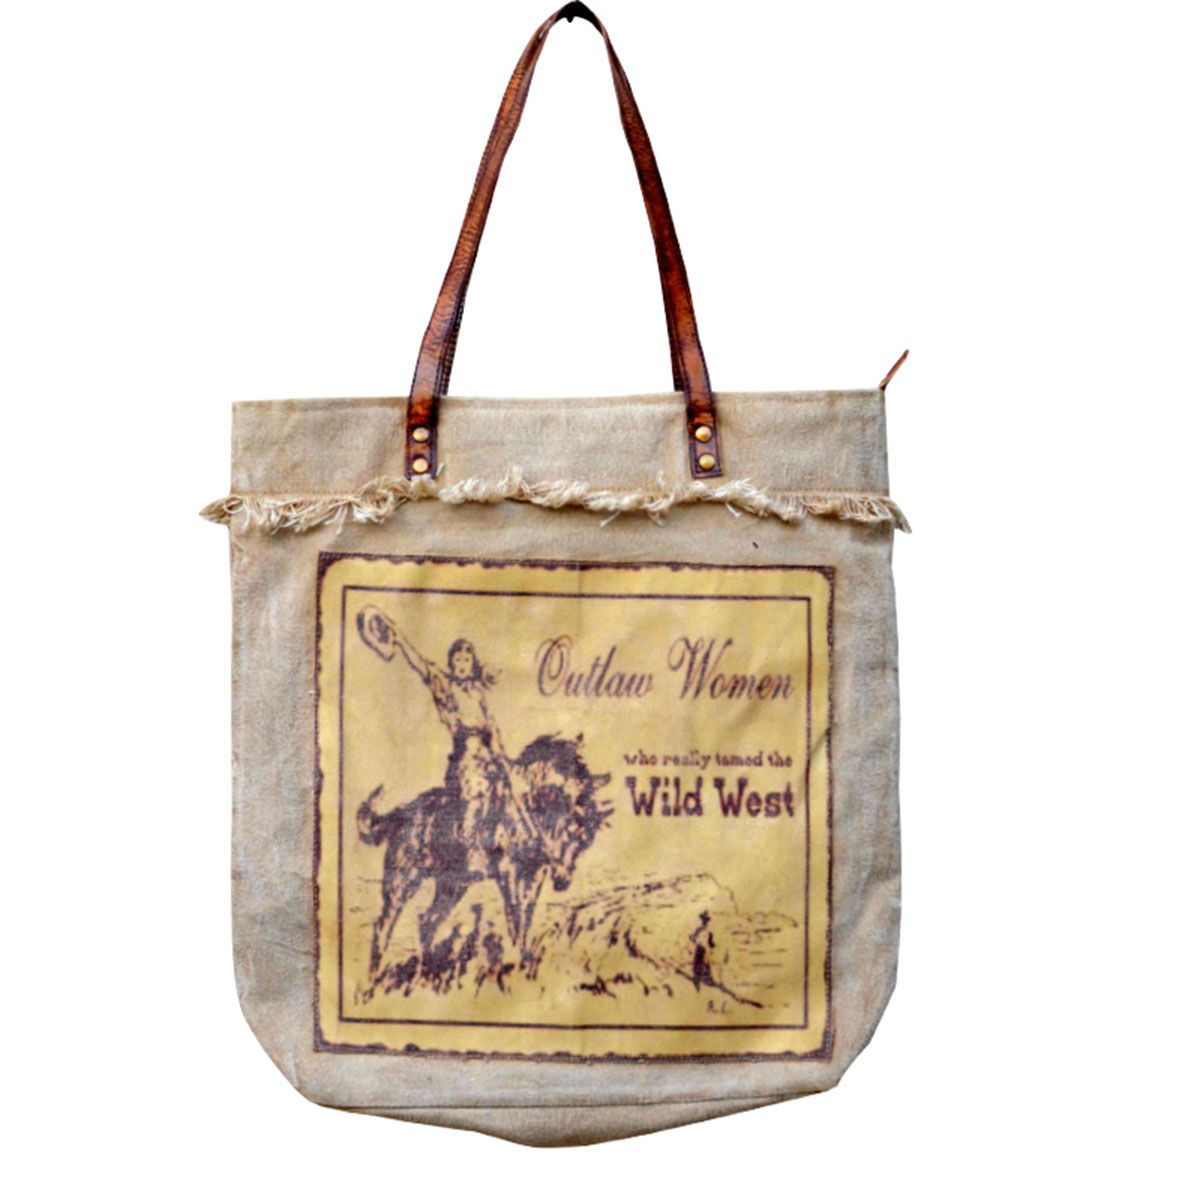 New Design Canvas Bag Lady Bags Women Handbags Cowboy Fabric Bag